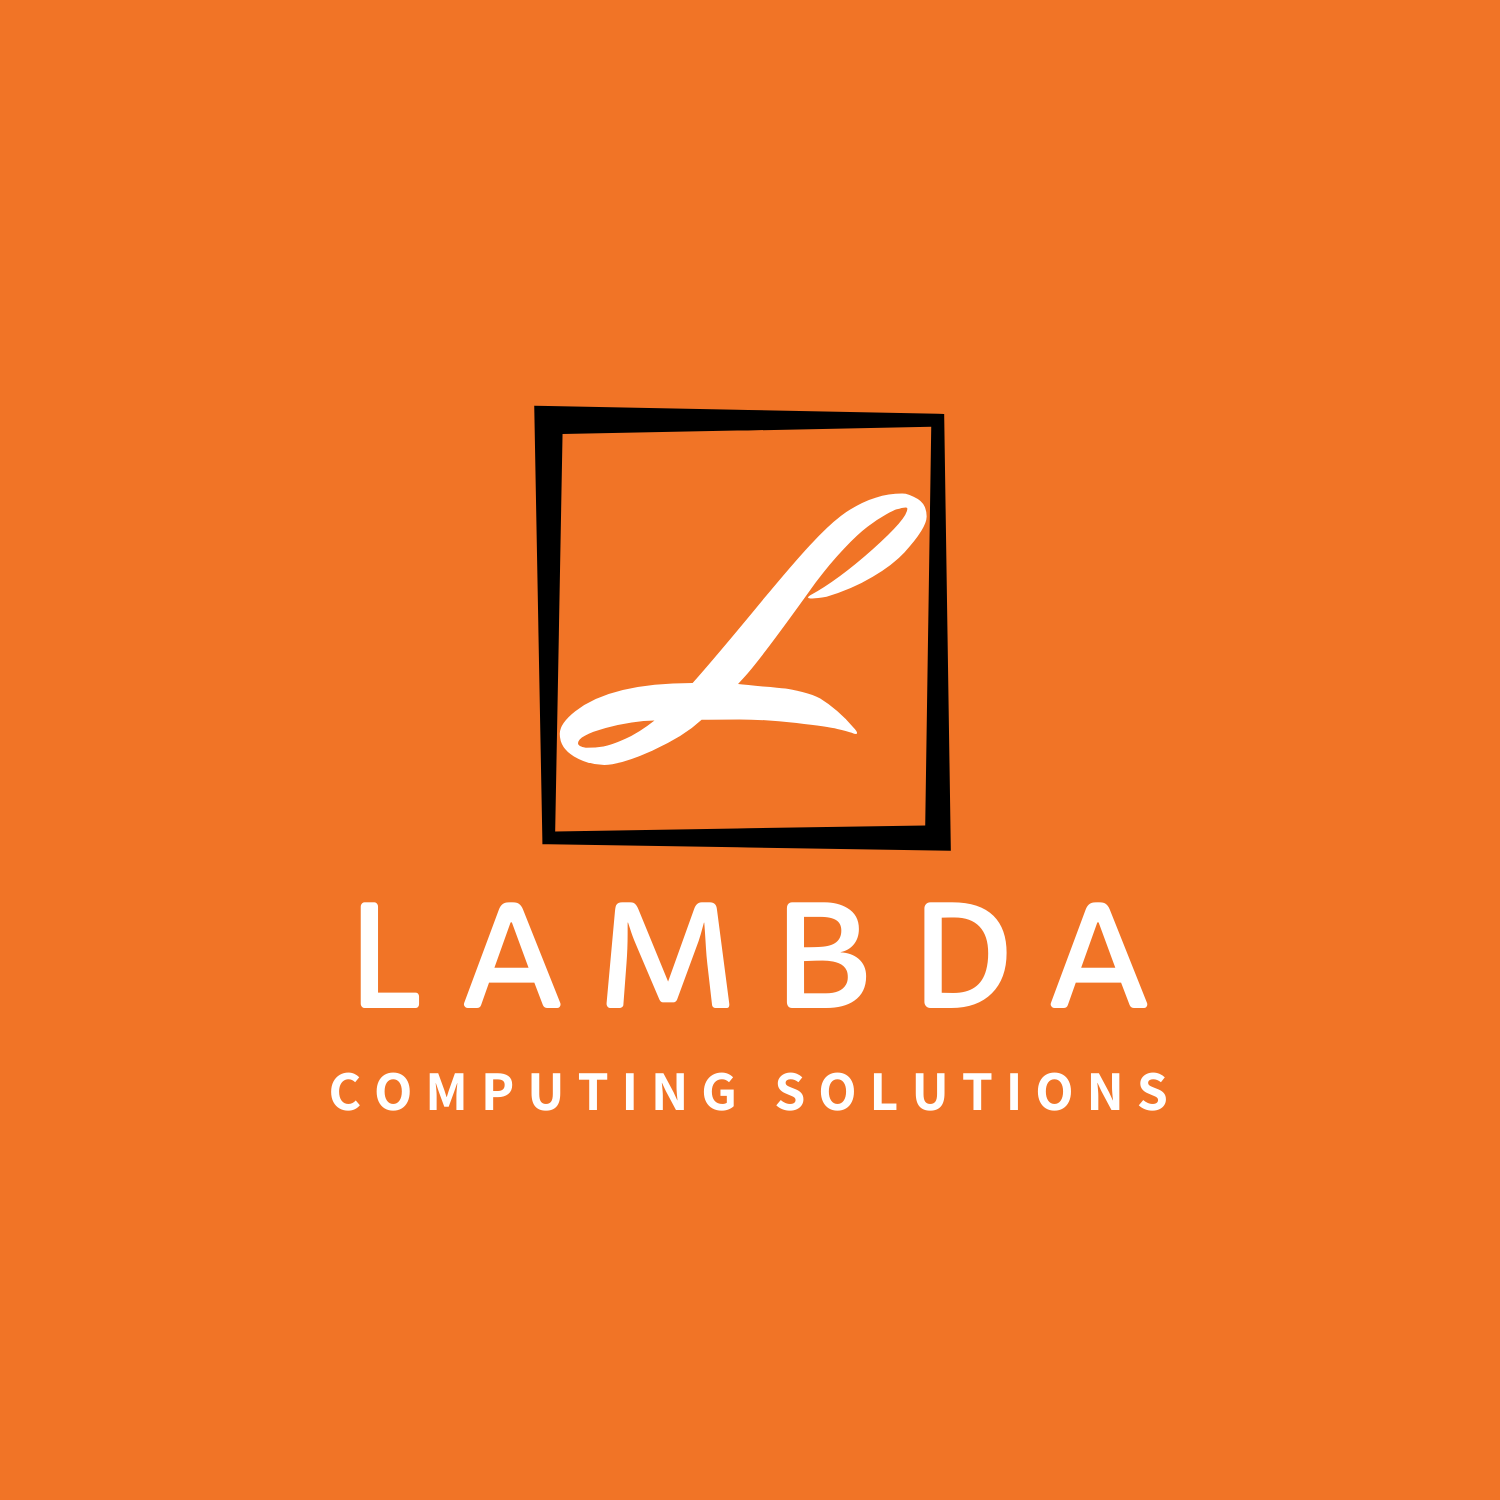 Lambda Computing Solutions (s) Pte. Ltd. company logo